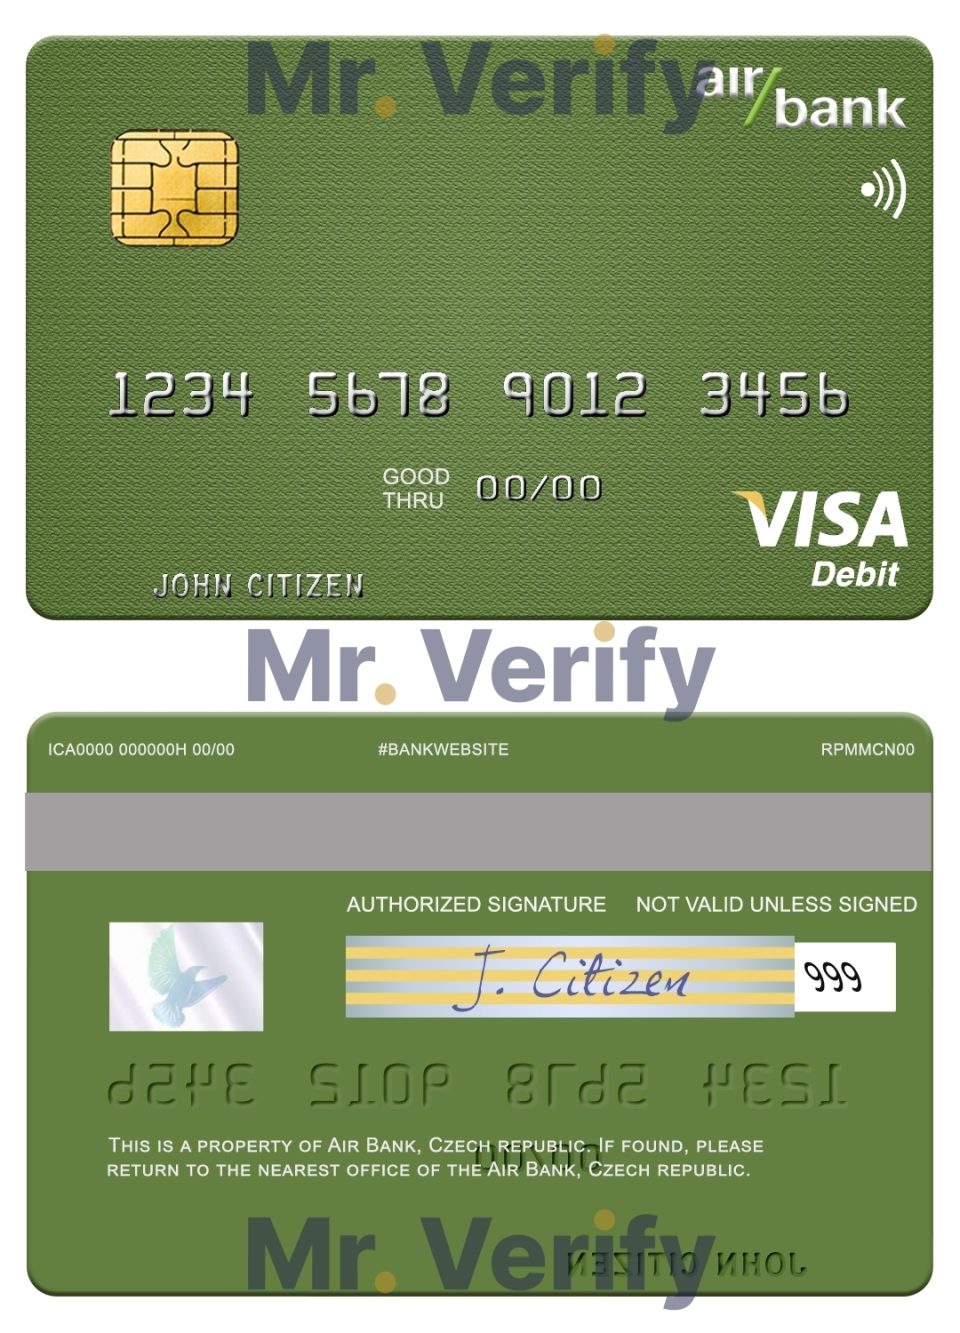 Fillable Czech Air Bank visa debit card Templates | Layer-Based PSD